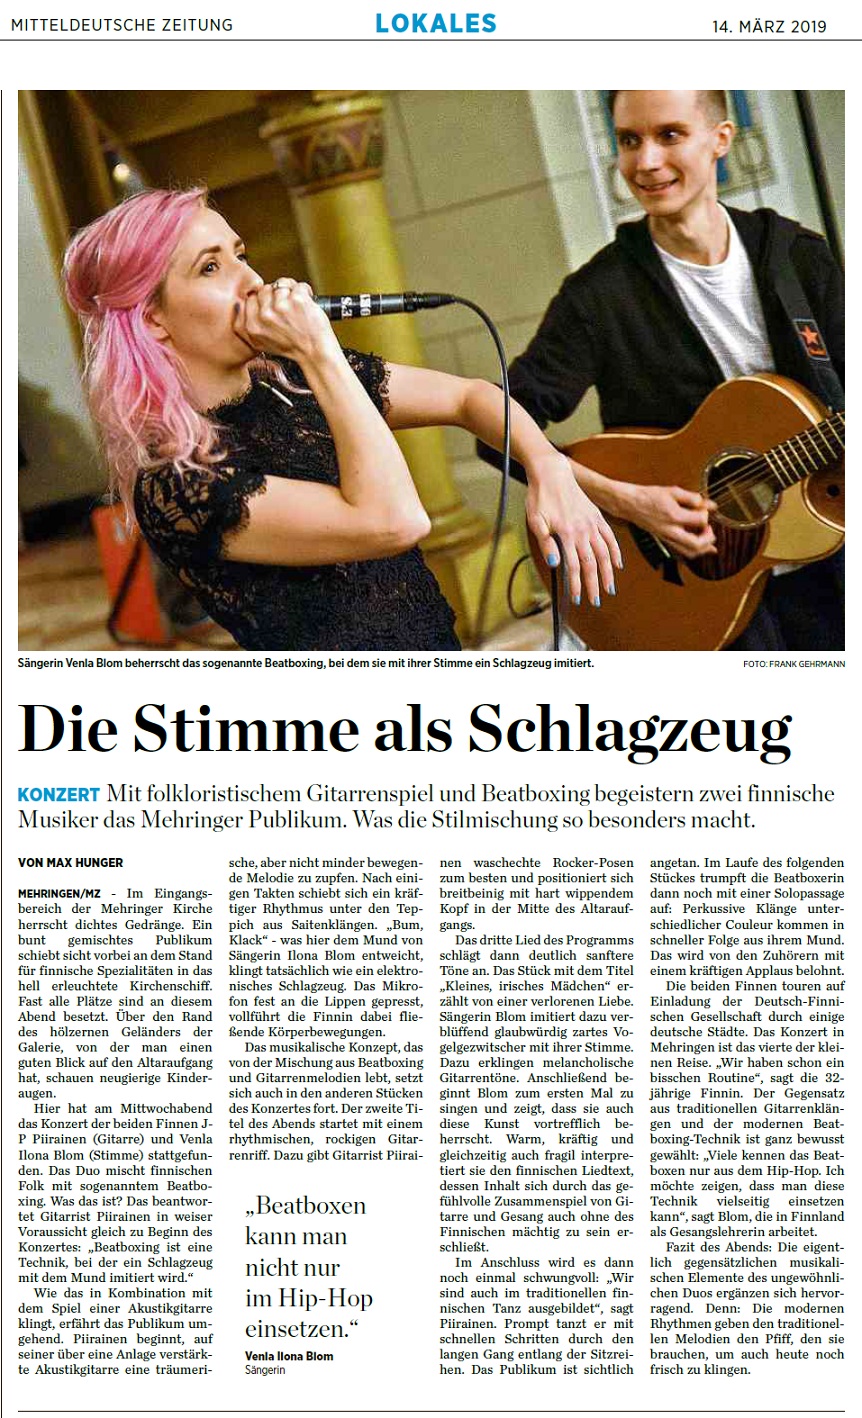 Mitteldeutsche Zeitung (Germany), 14.3.2019